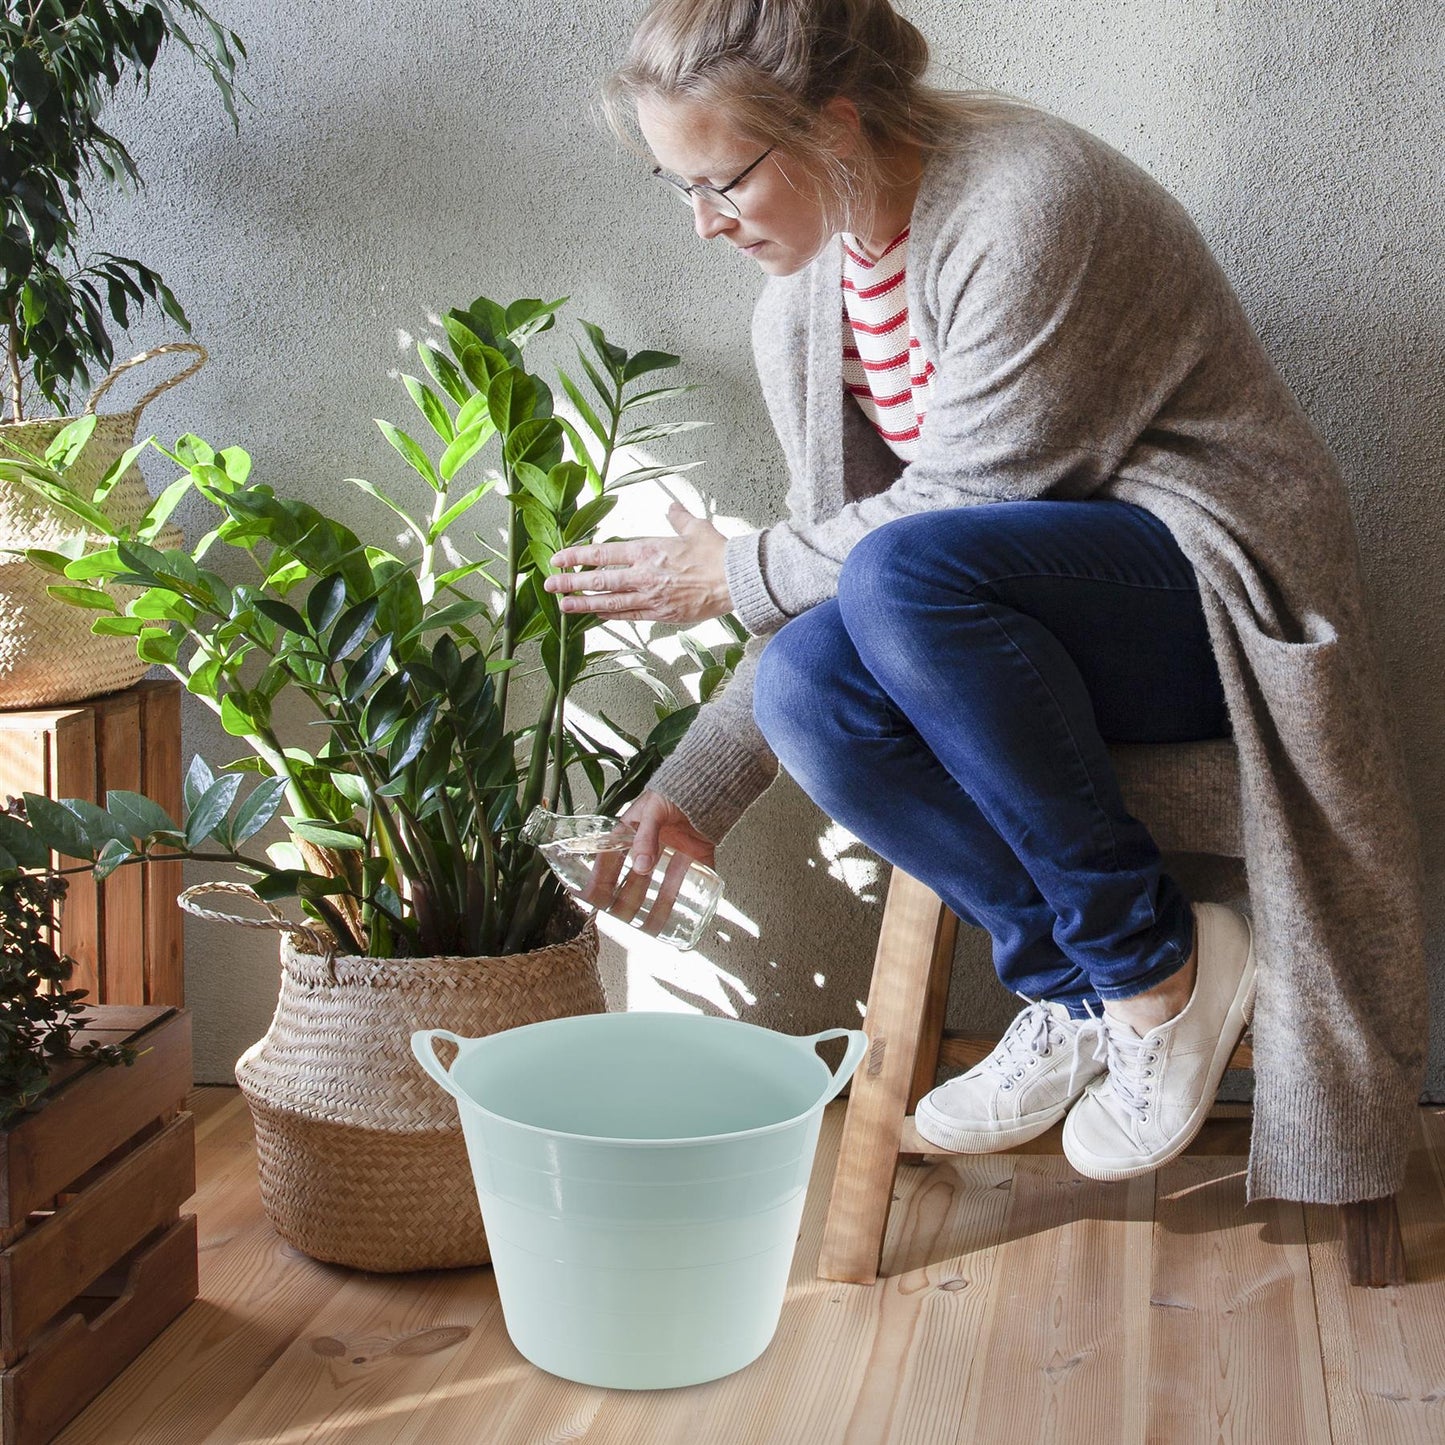 Flexi Tub 7L Home Garden Laundry Basket by GEEZY - UKBuyZone